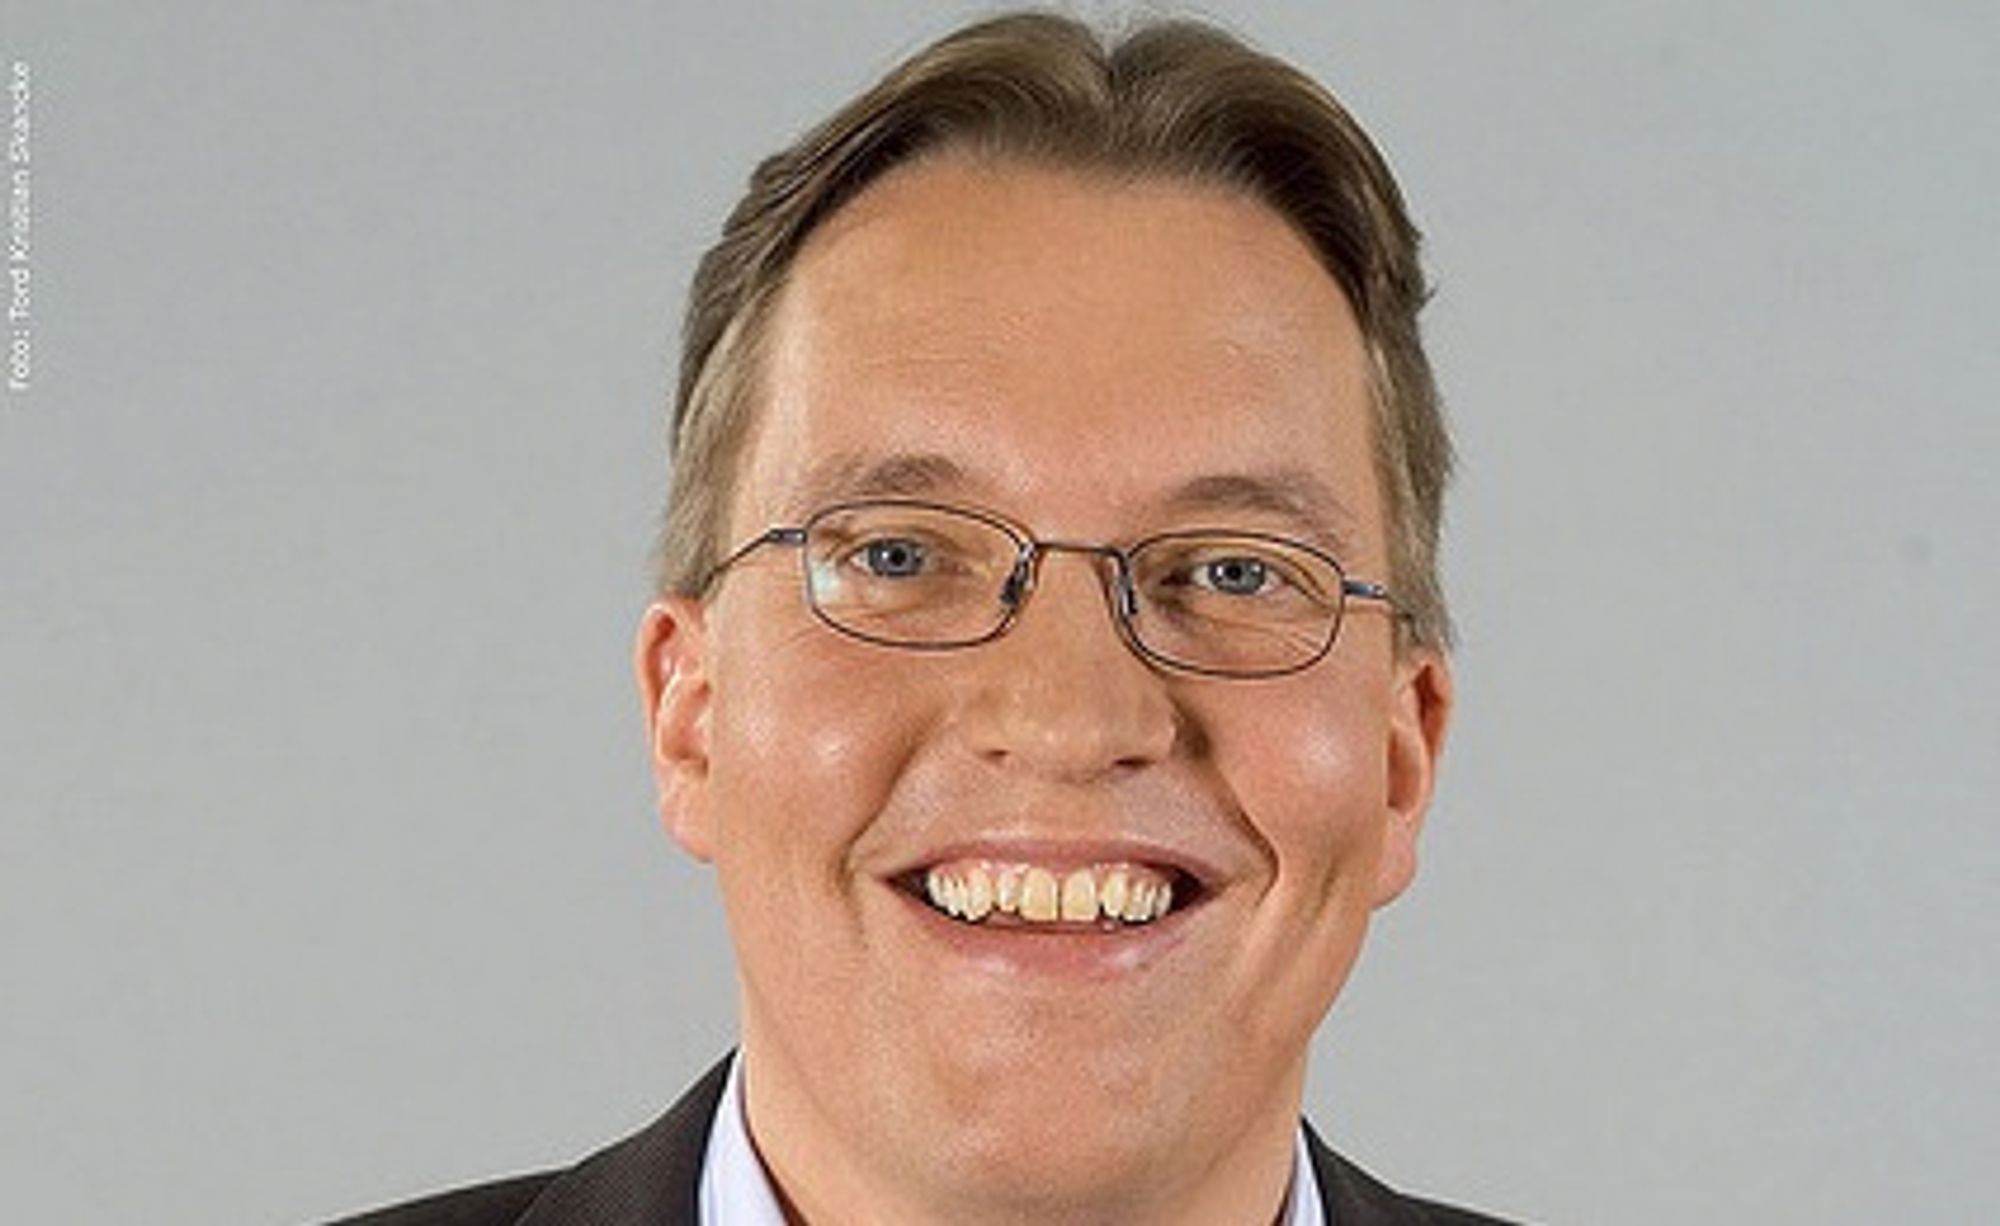 Sverre Myrli sitter i transportkomiteen på Stortinget for arbeiderpartiet.